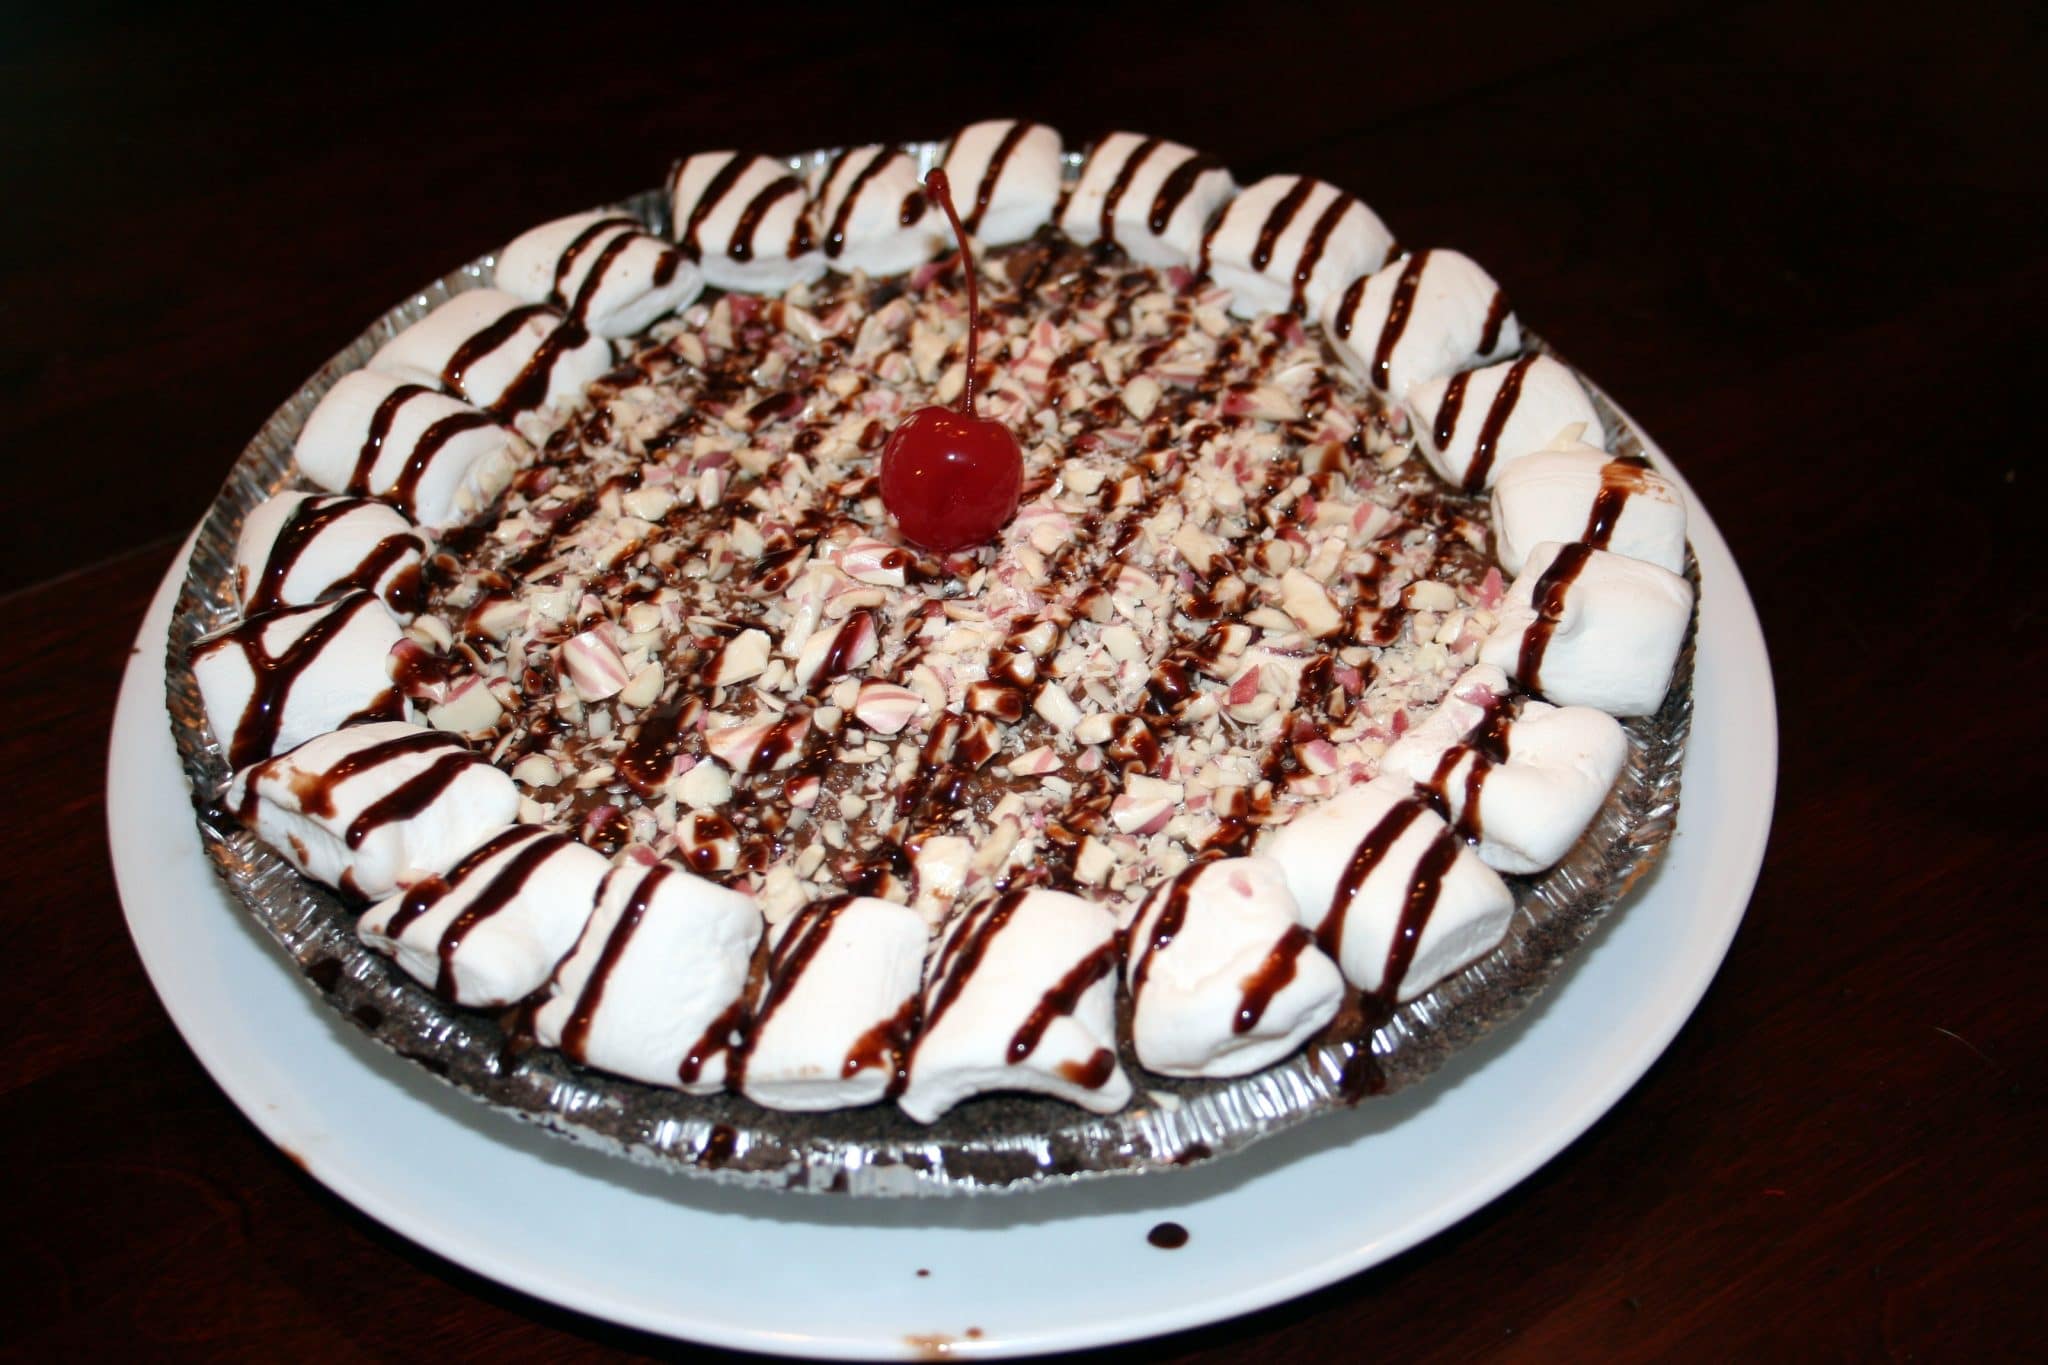 Platter of Vegan Chocolate Cream Pie